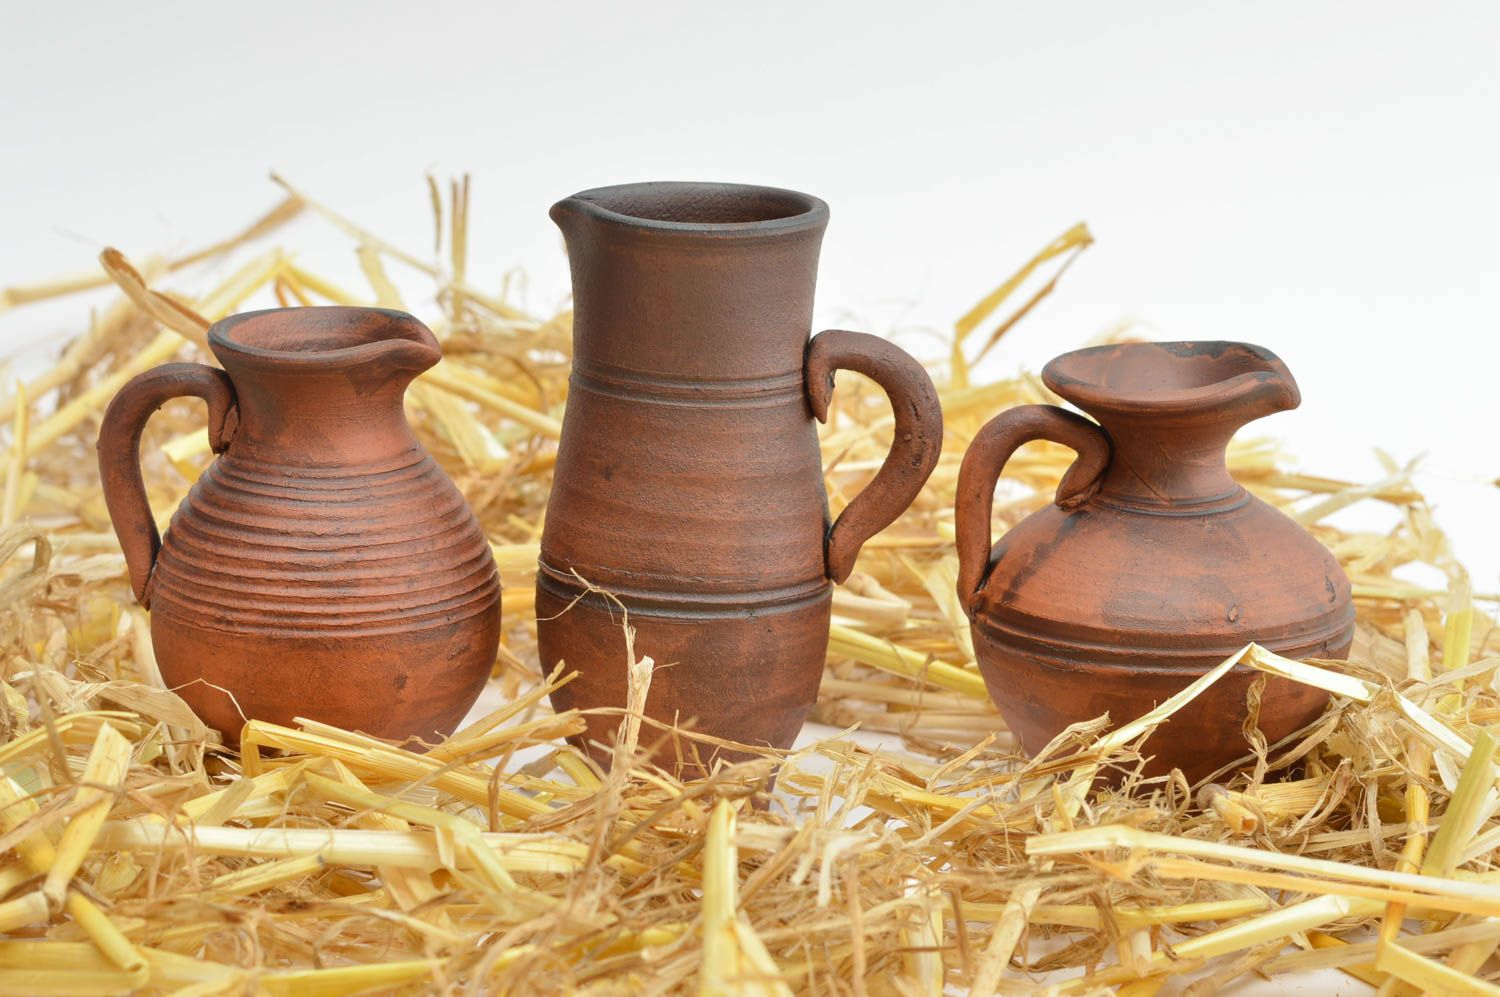 Set of three ceramic lead-free ceramic wine or milk jugs with handles 0,56 lb photo 1